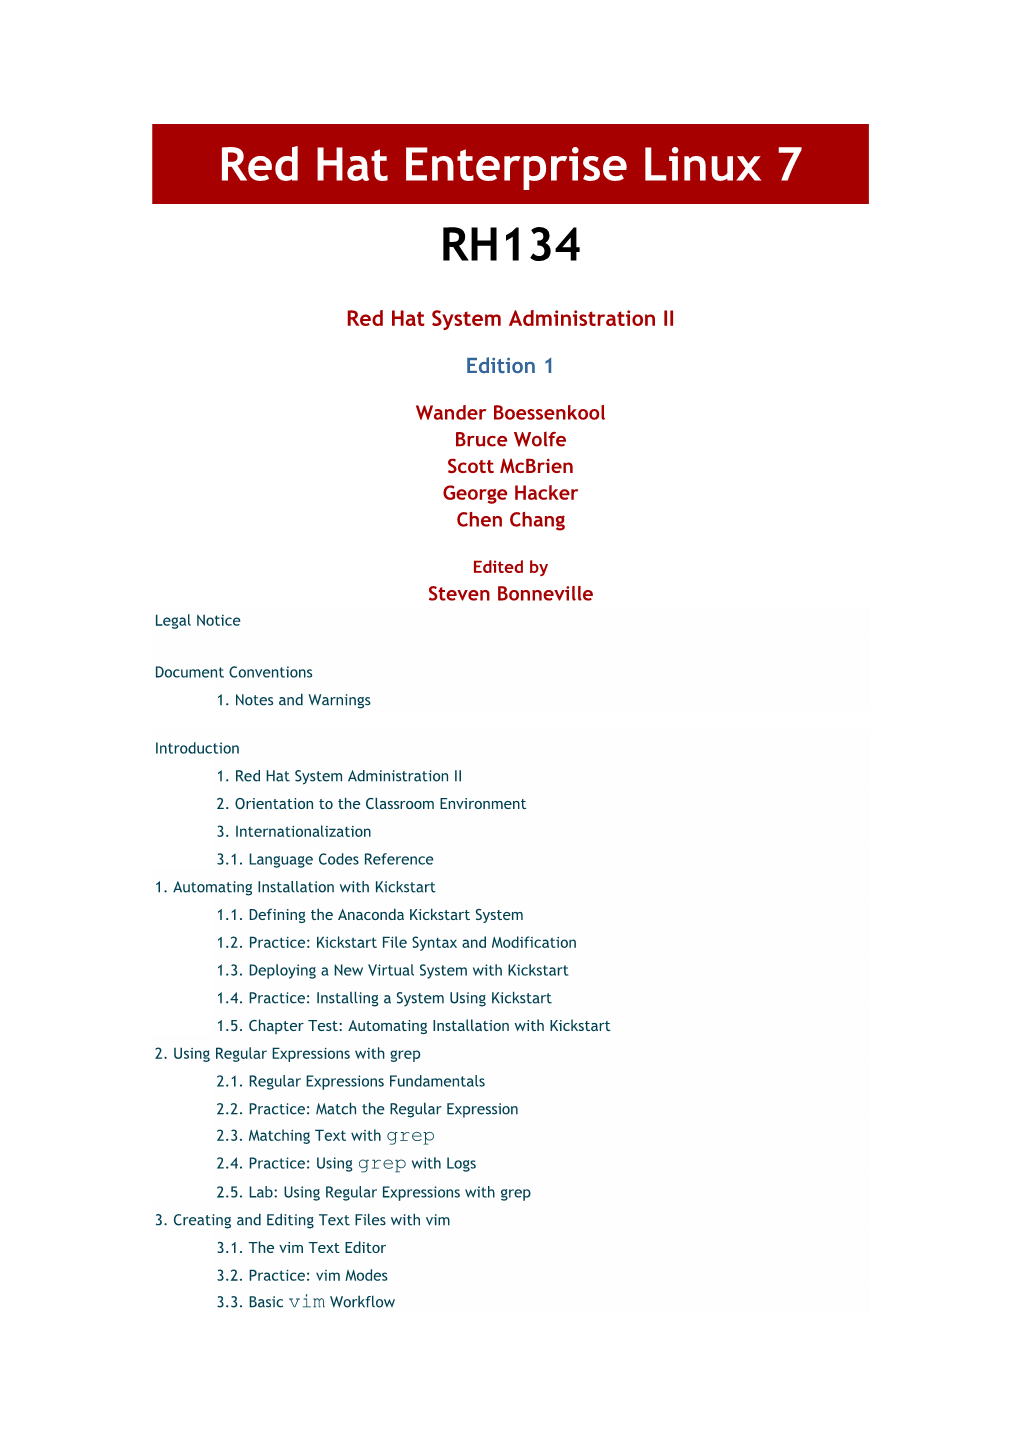 Red Hat Enterprise Linux 7 RH134